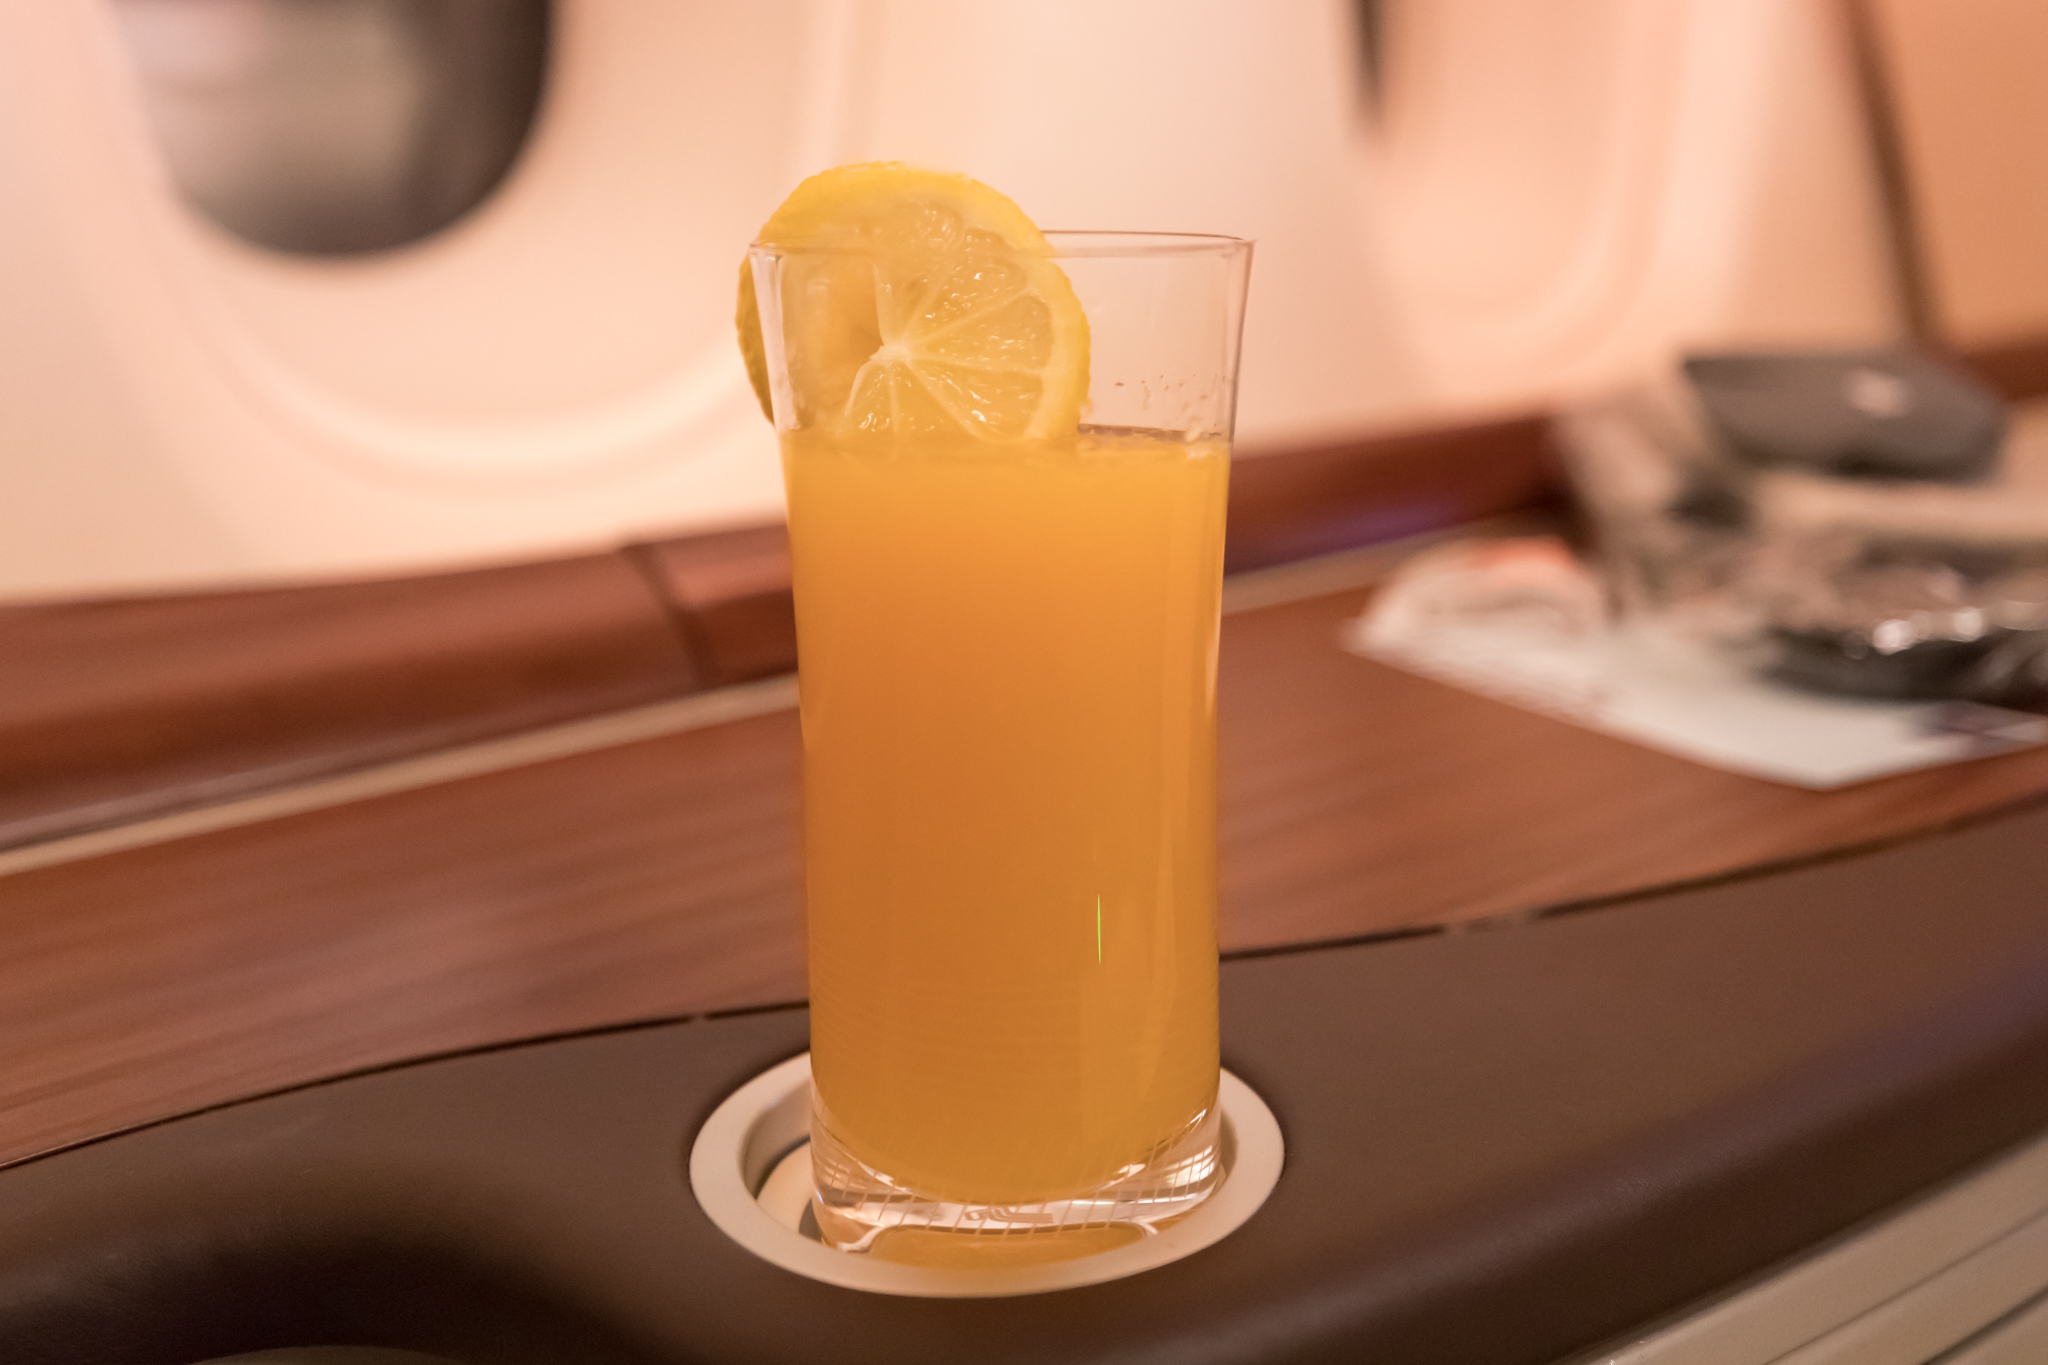 a glass of orange juice with a slice of lemon on a coaster